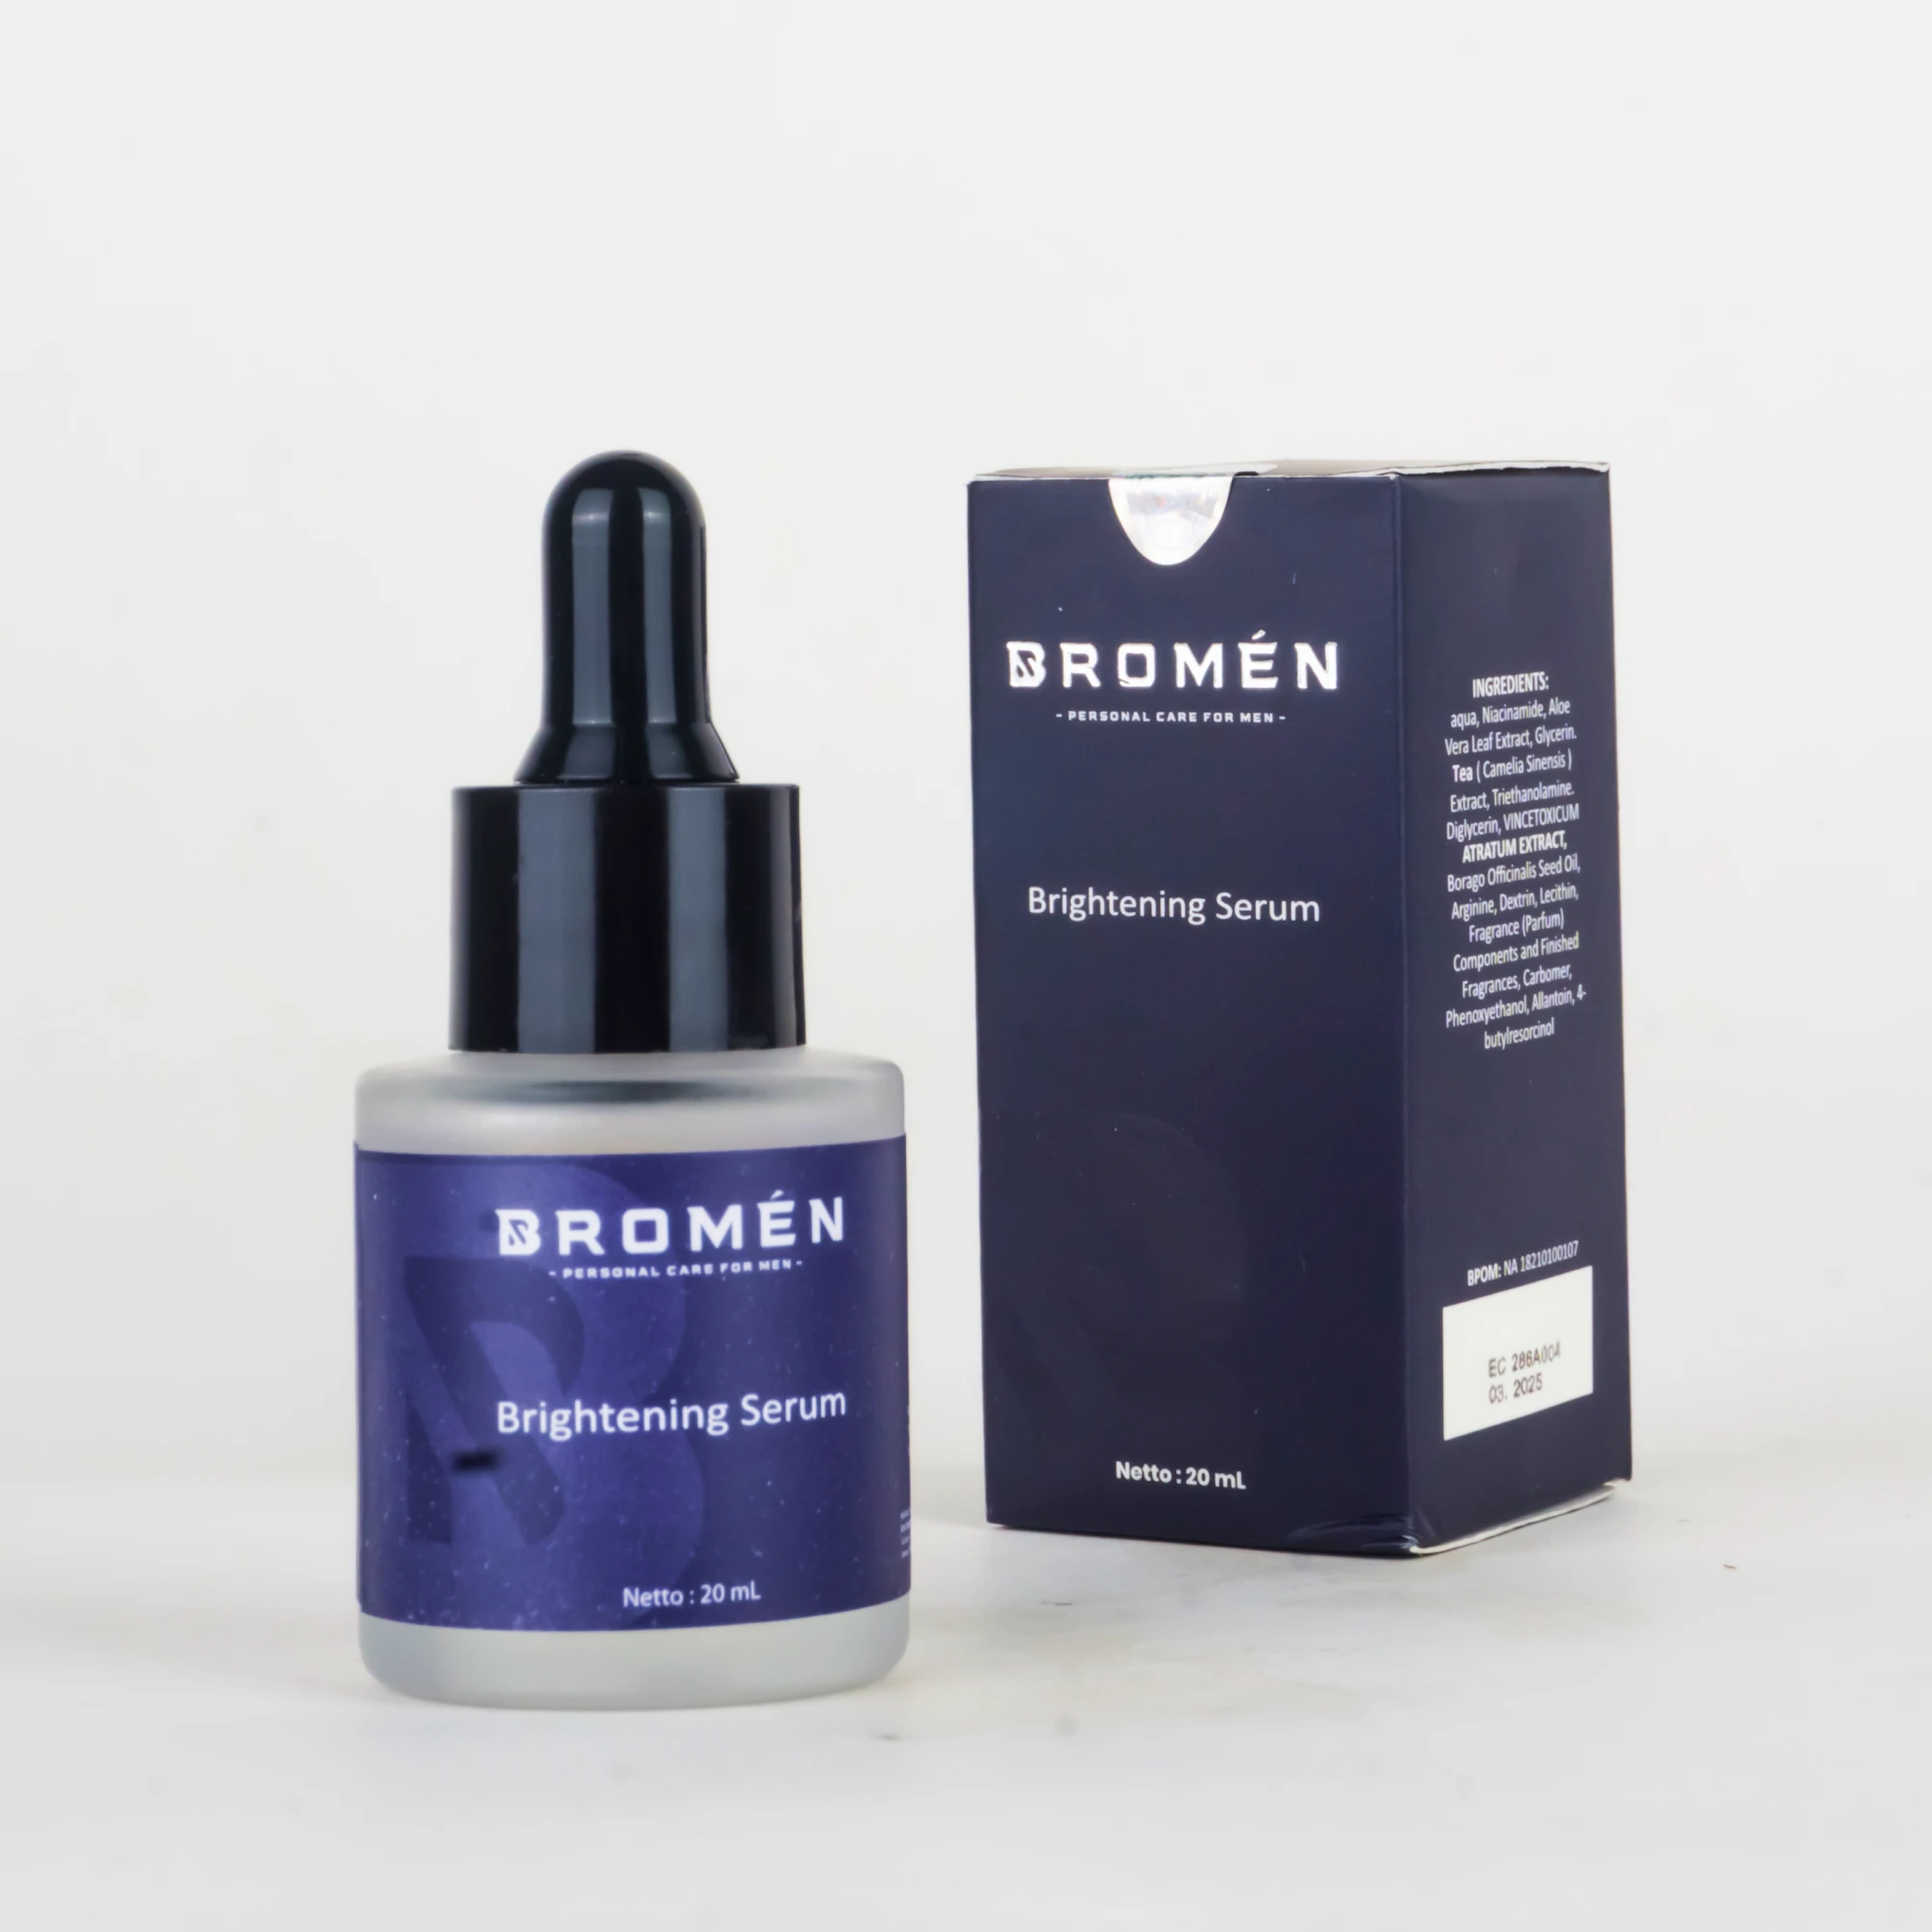 bromen brightening serum closeup with box